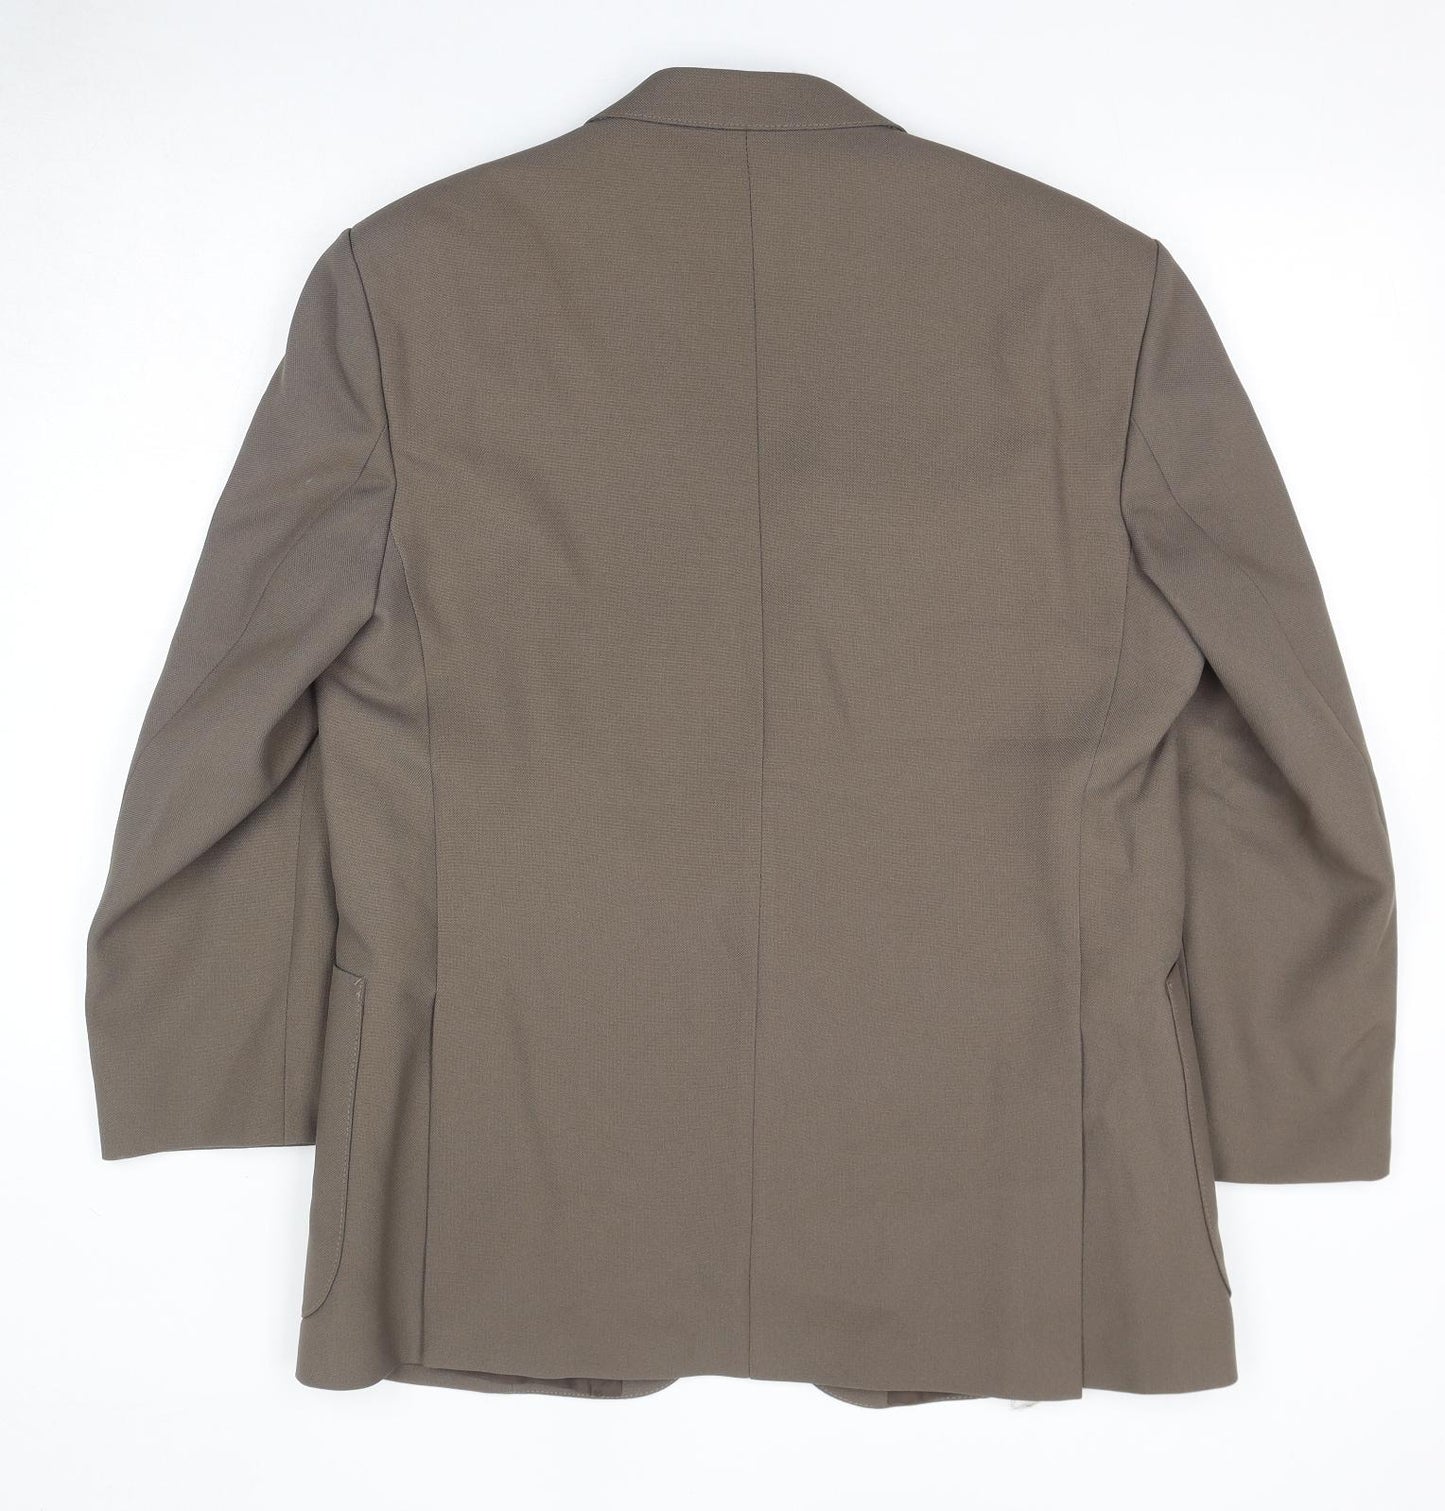 Greenwoods Mens Beige Polyester Jacket Blazer Size 44 Regular